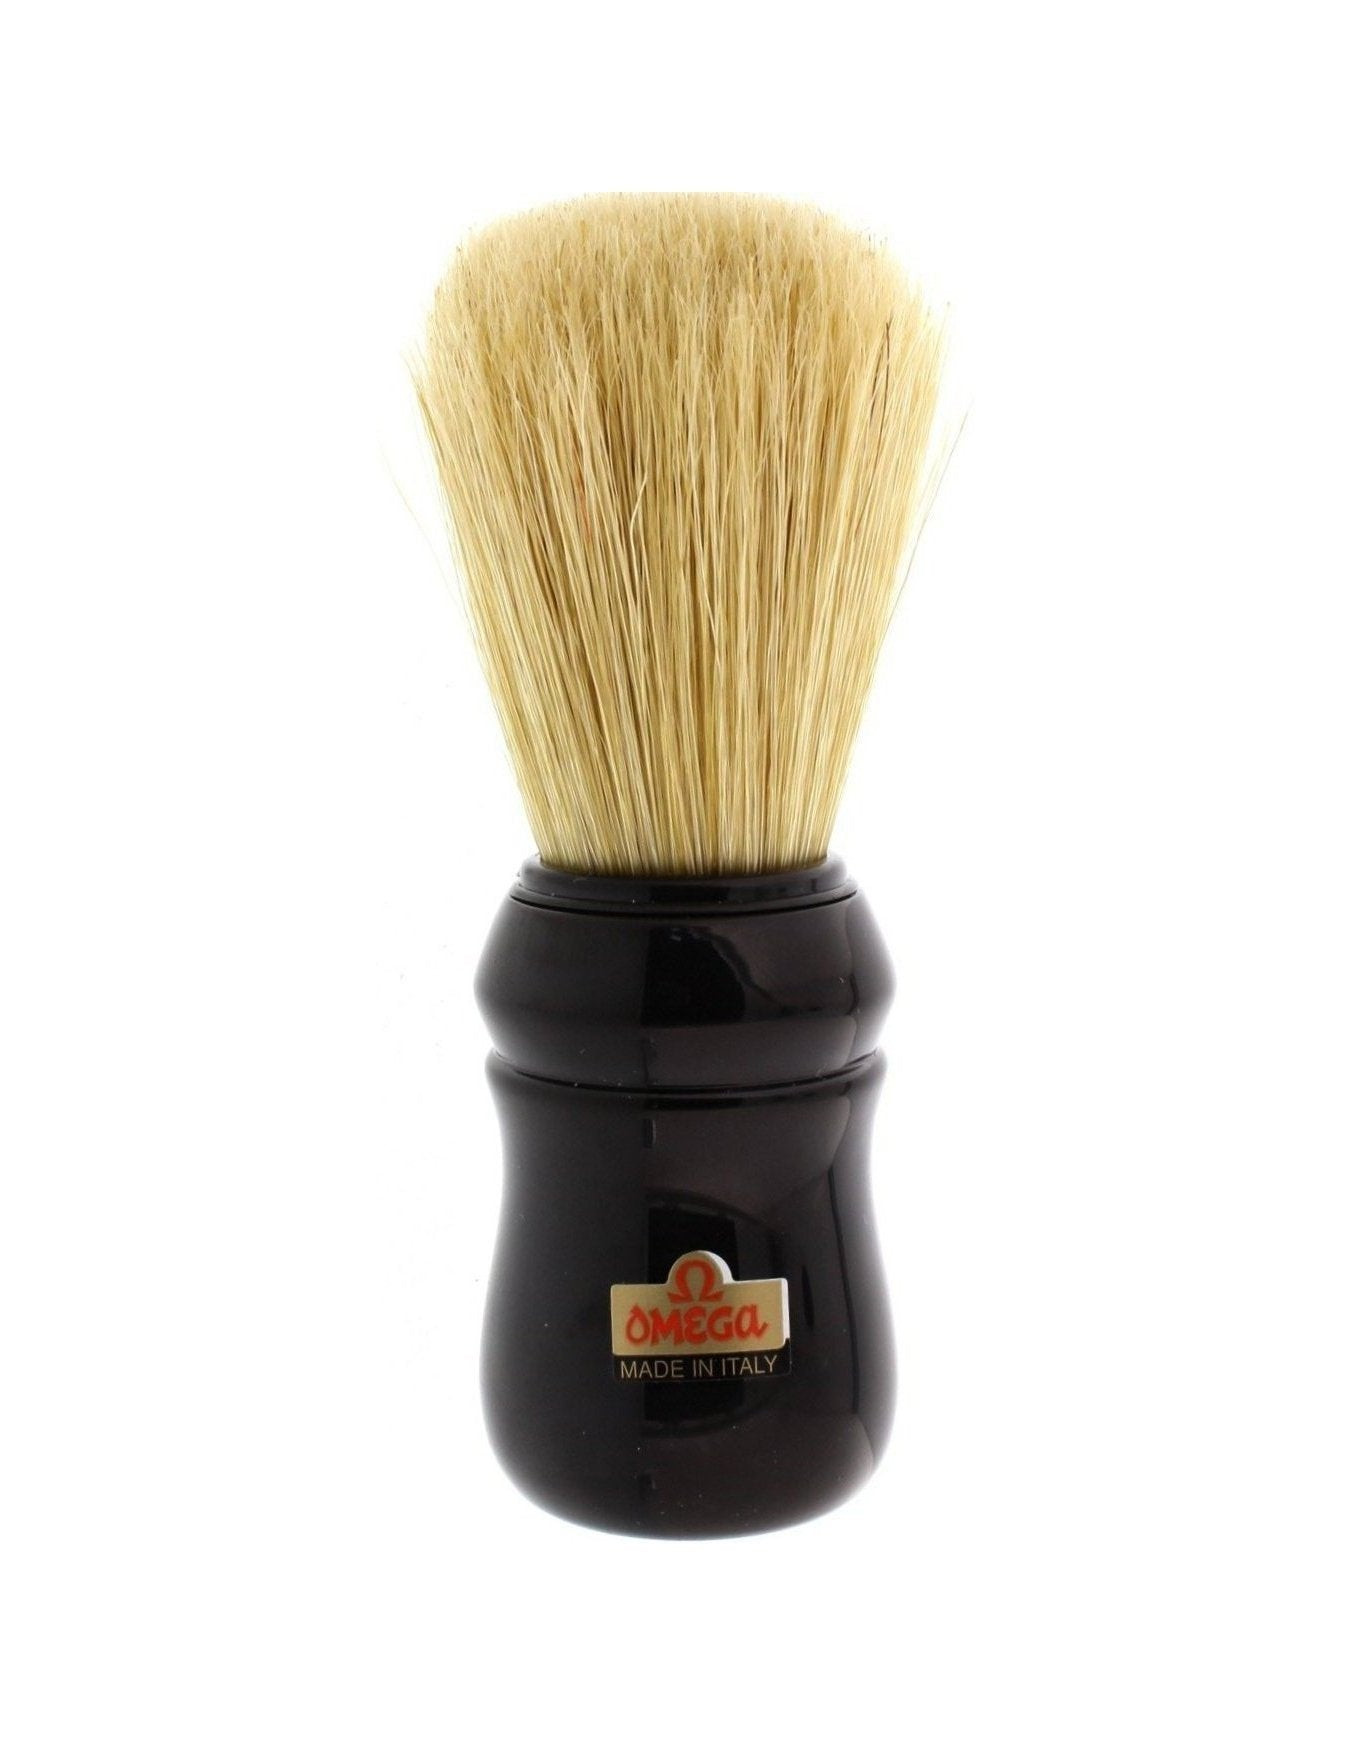 Omega 10049 Professional Boar Shaving Brush, Black Handle